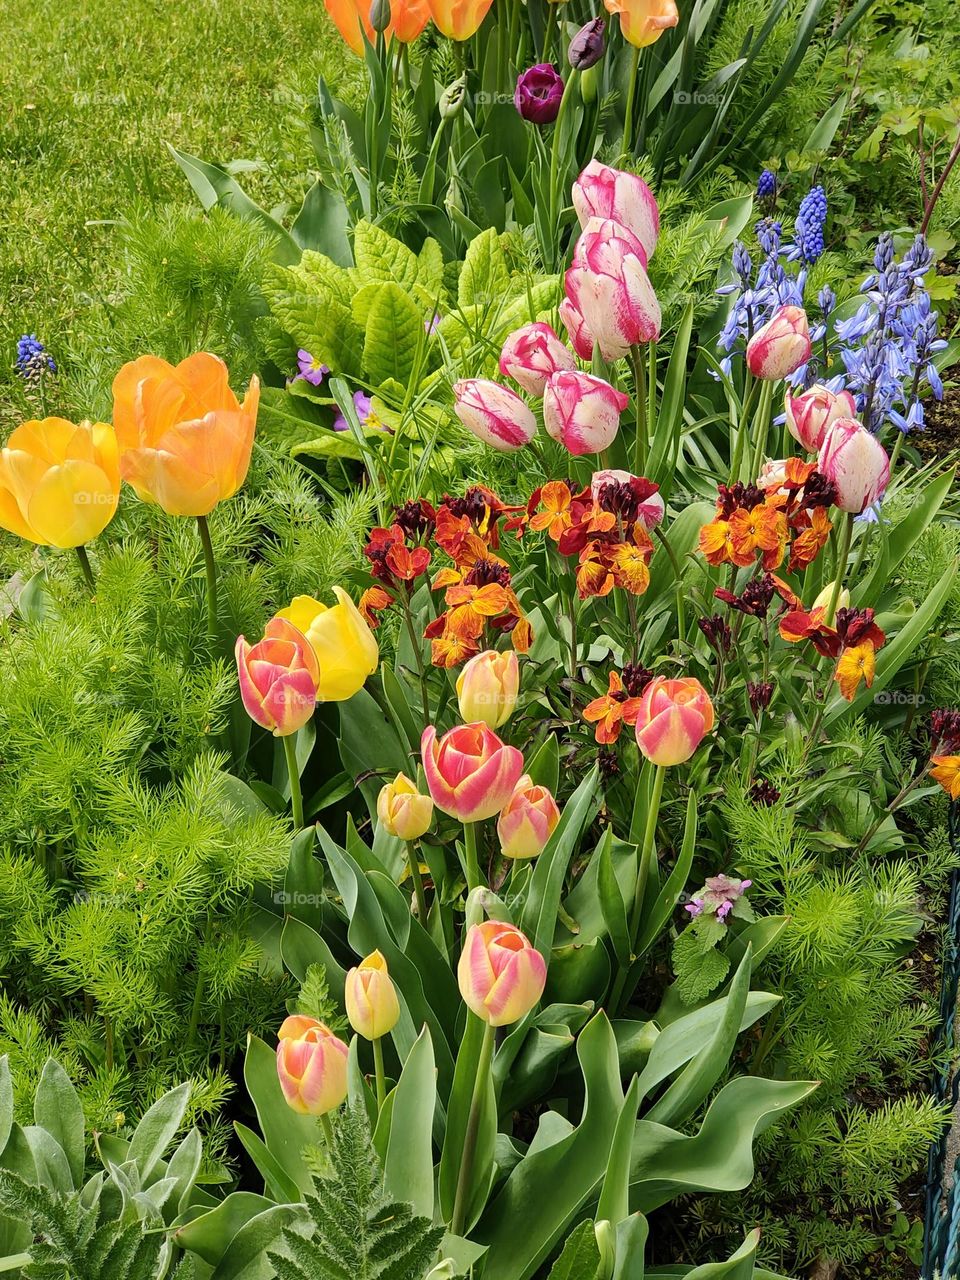 April - Colorful springtime flowers